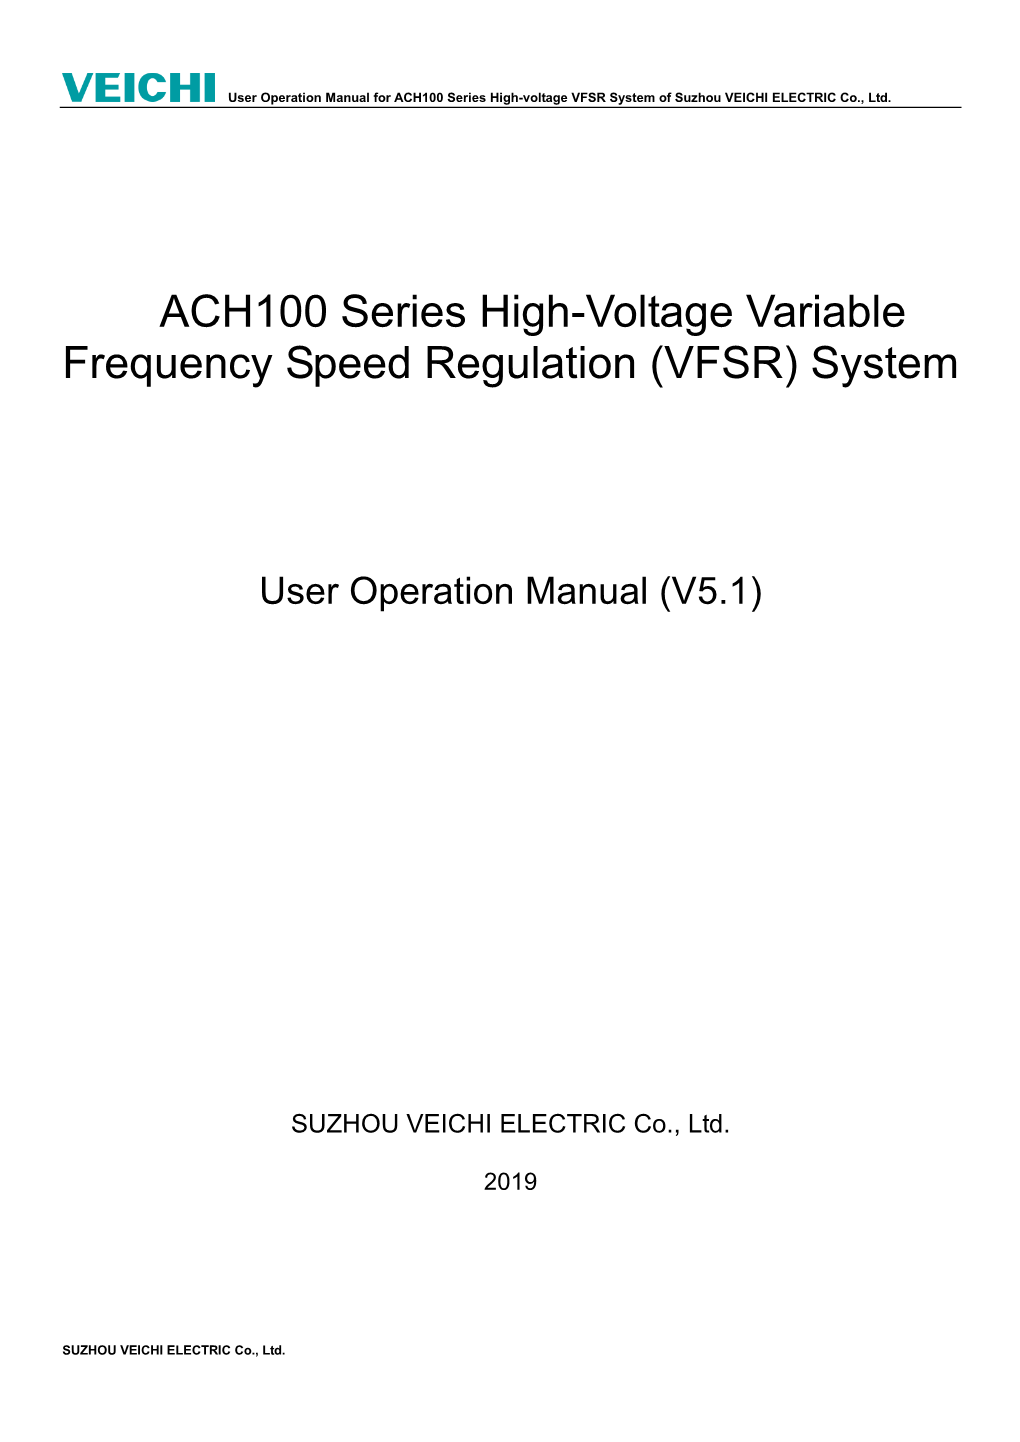 VEICHI ACH100 Series High-Voltage Inverter Manual V5.1